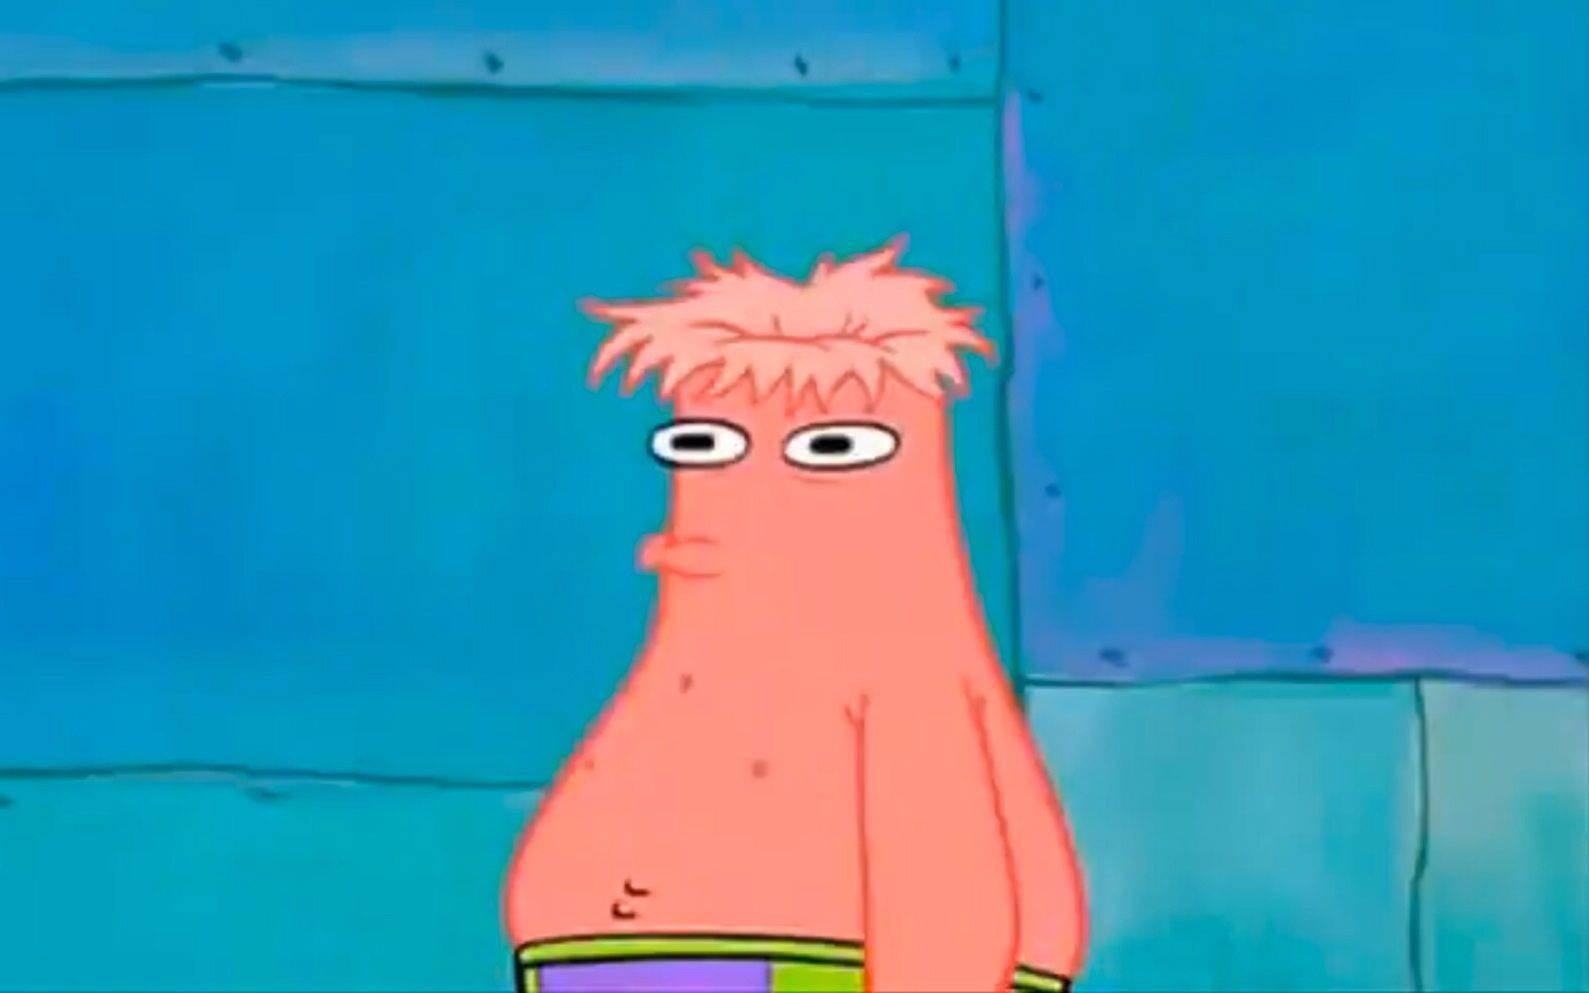 Patrick's Head Spongebob Meme Wallpaper